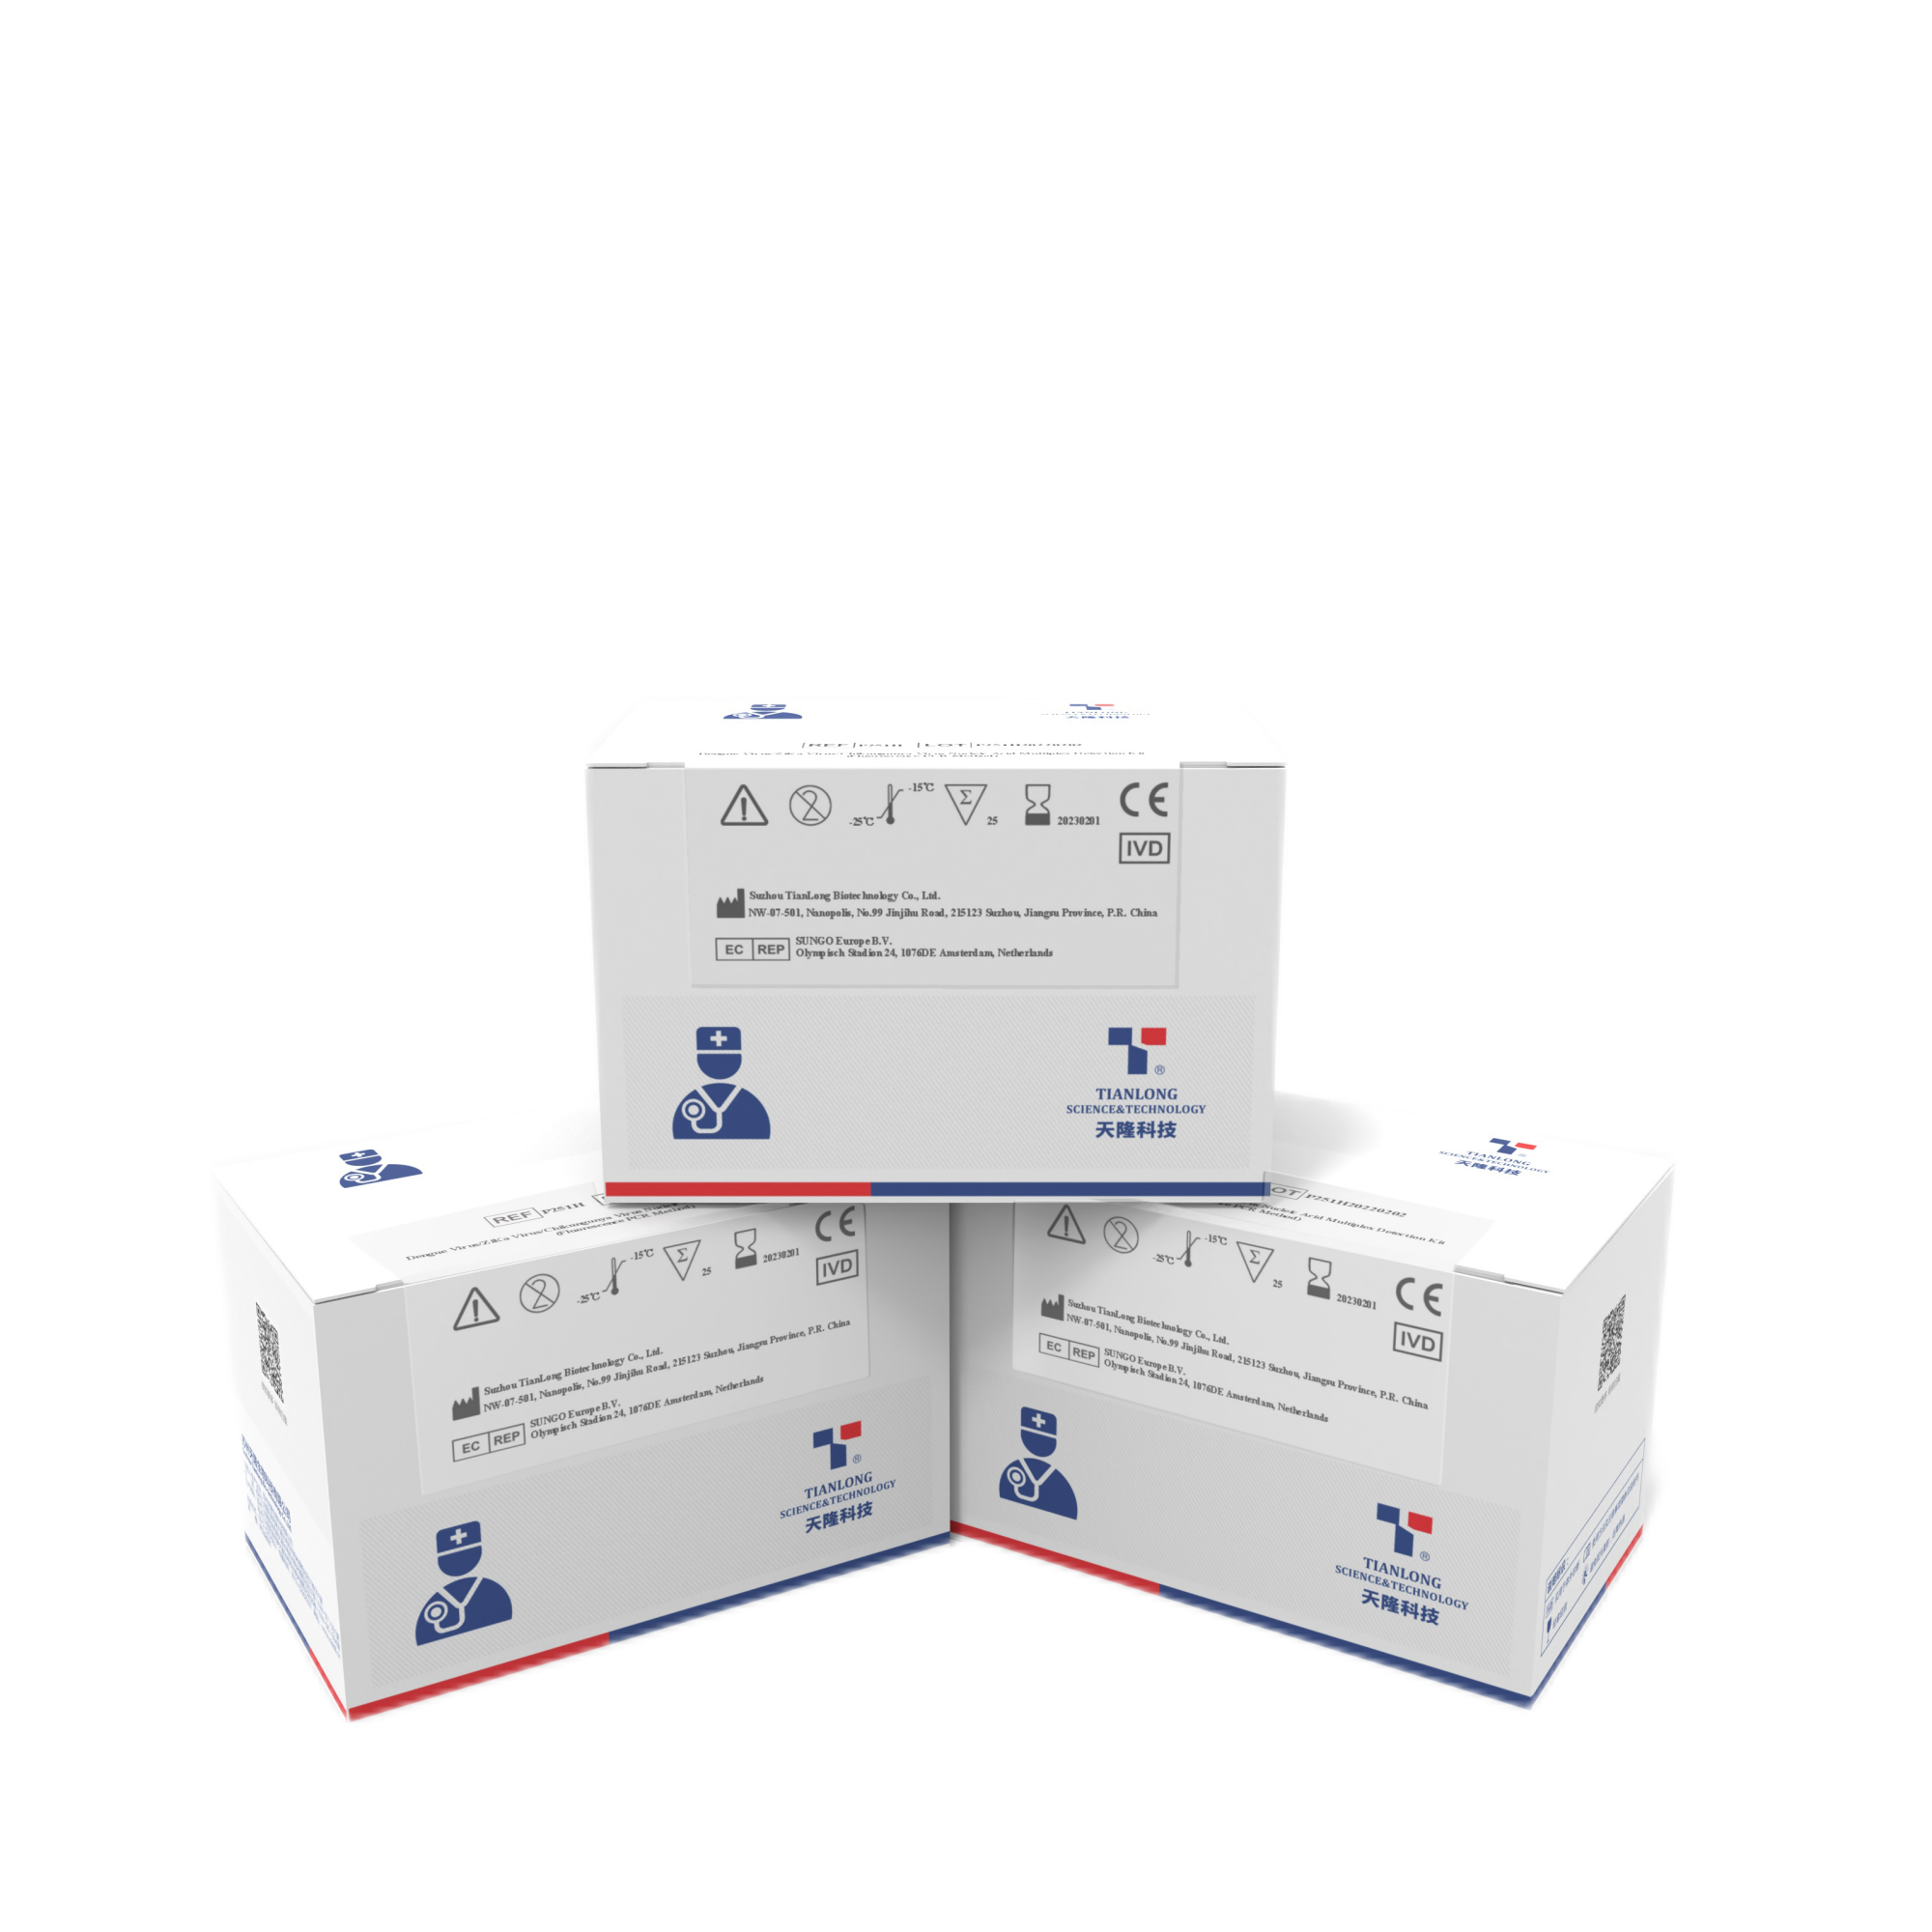 P579H - Listeria Monocytogenes DNA Detection Kit